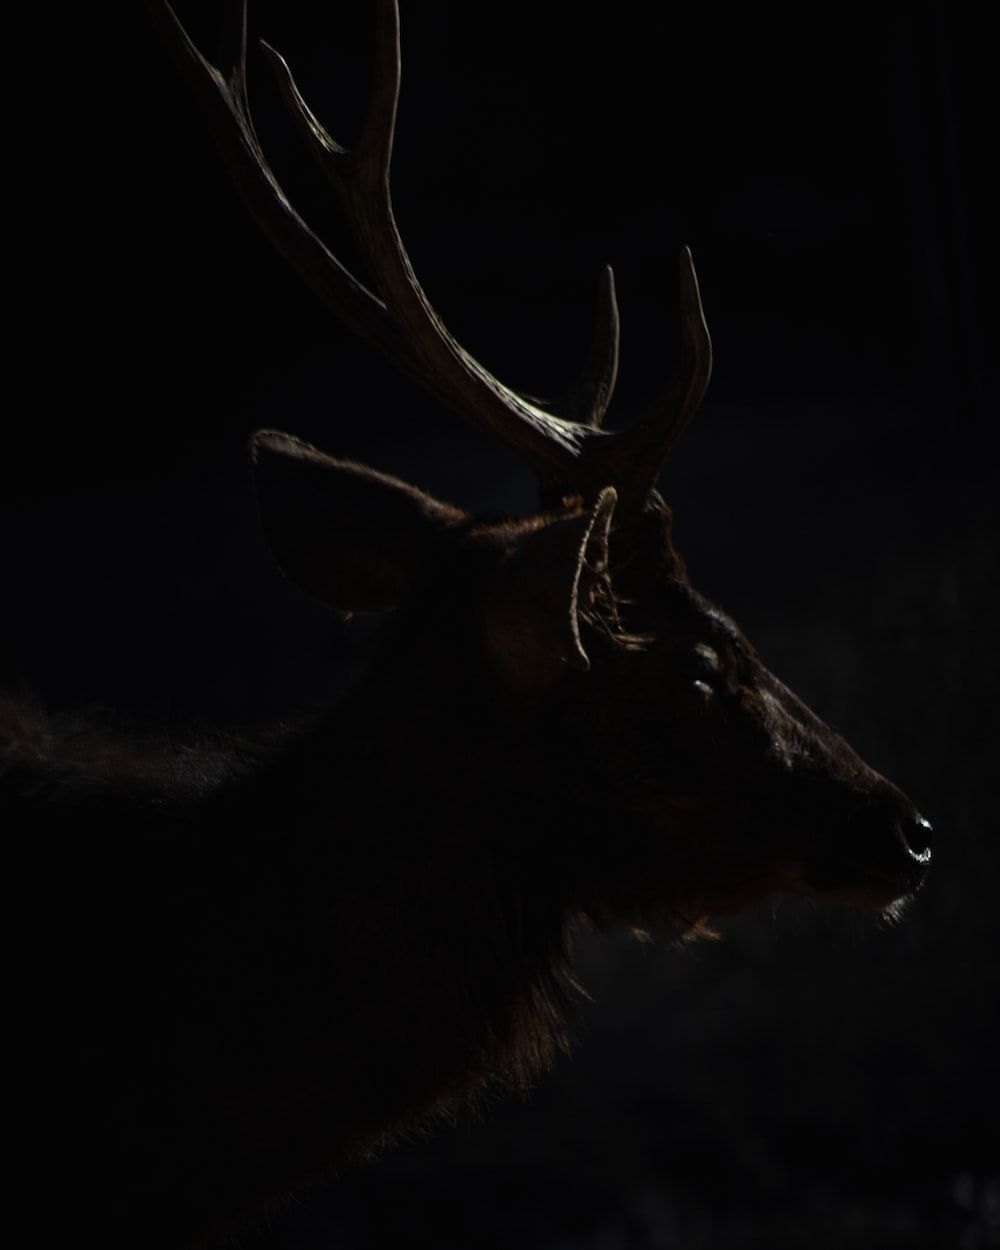 Brown deer with black background photo